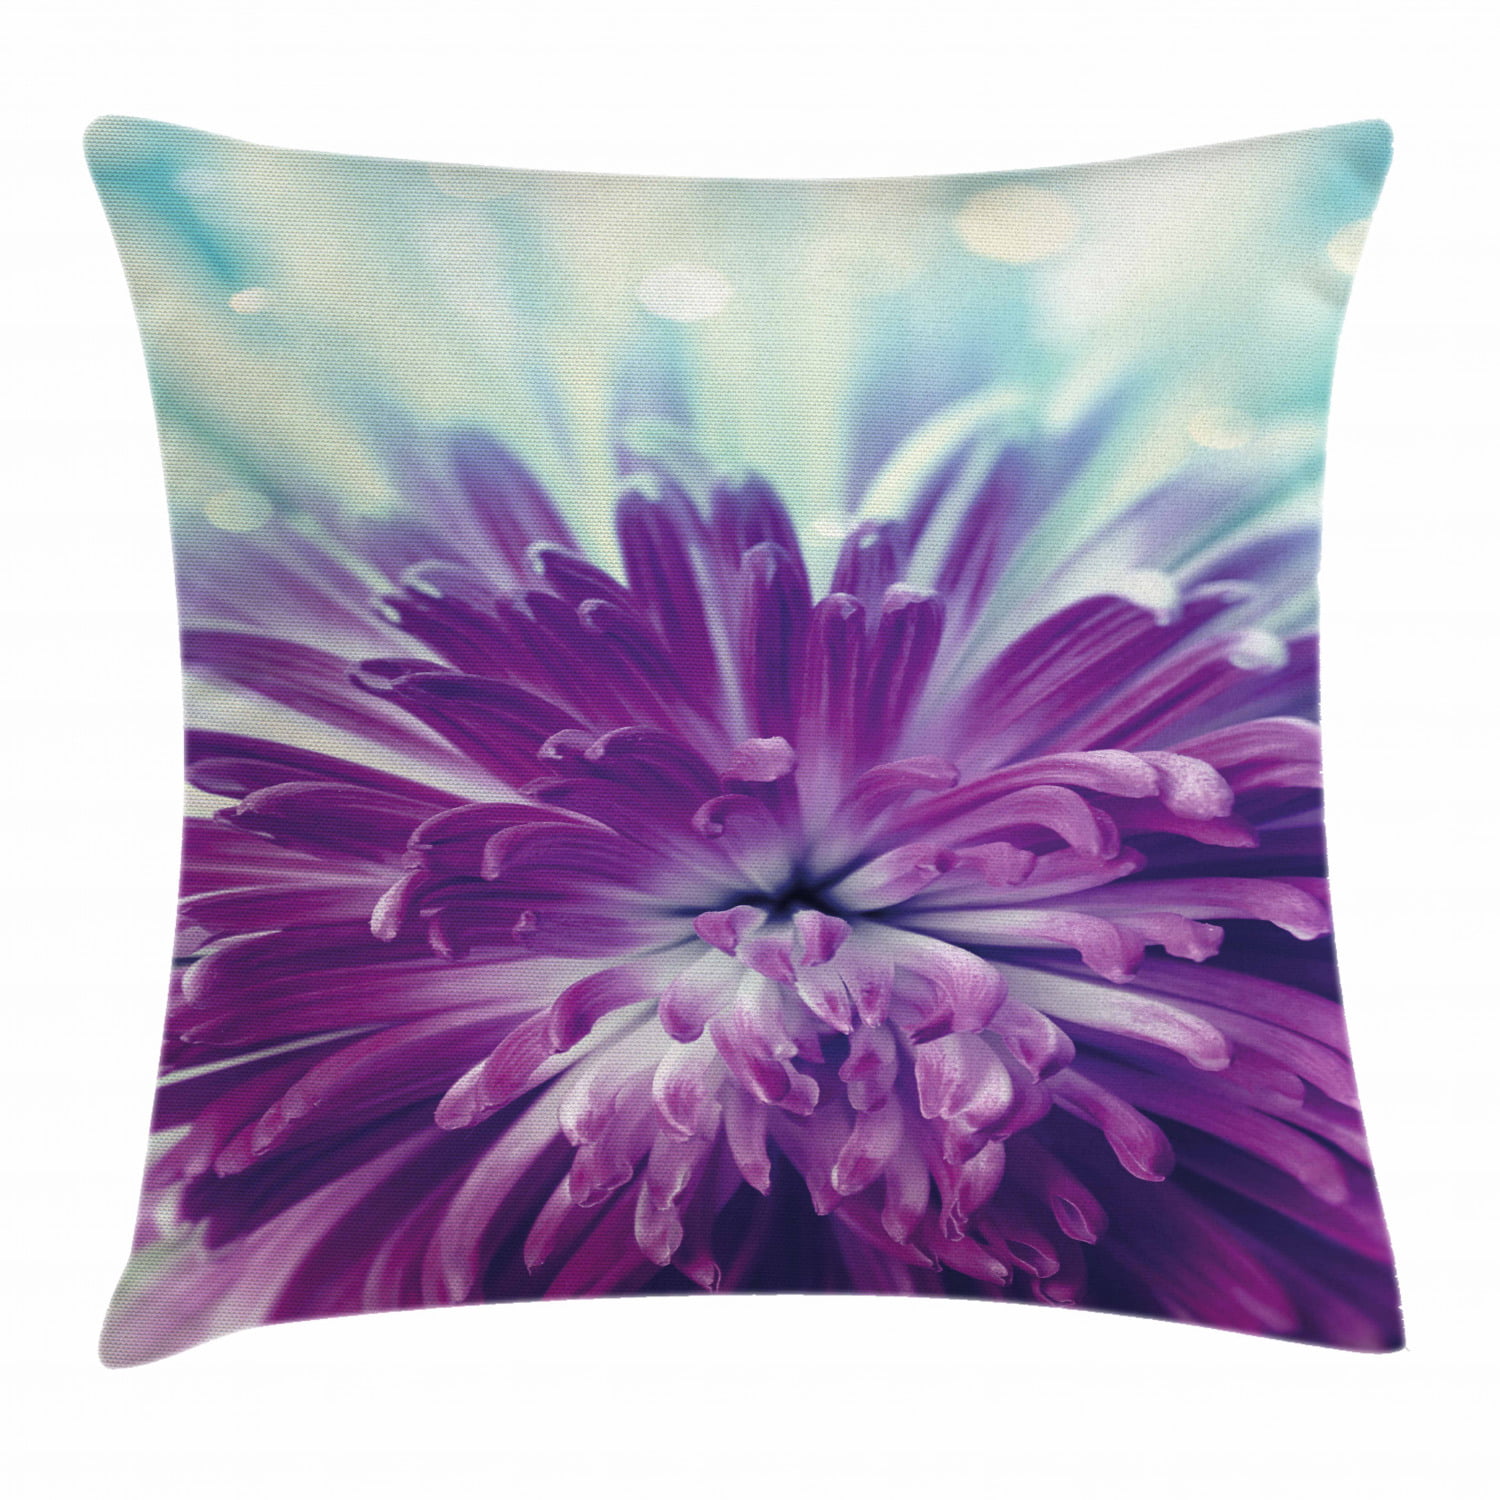 Dahlia Throw Pillow Cushion Cover, Violet Colored Blooming Dahlia Close ...